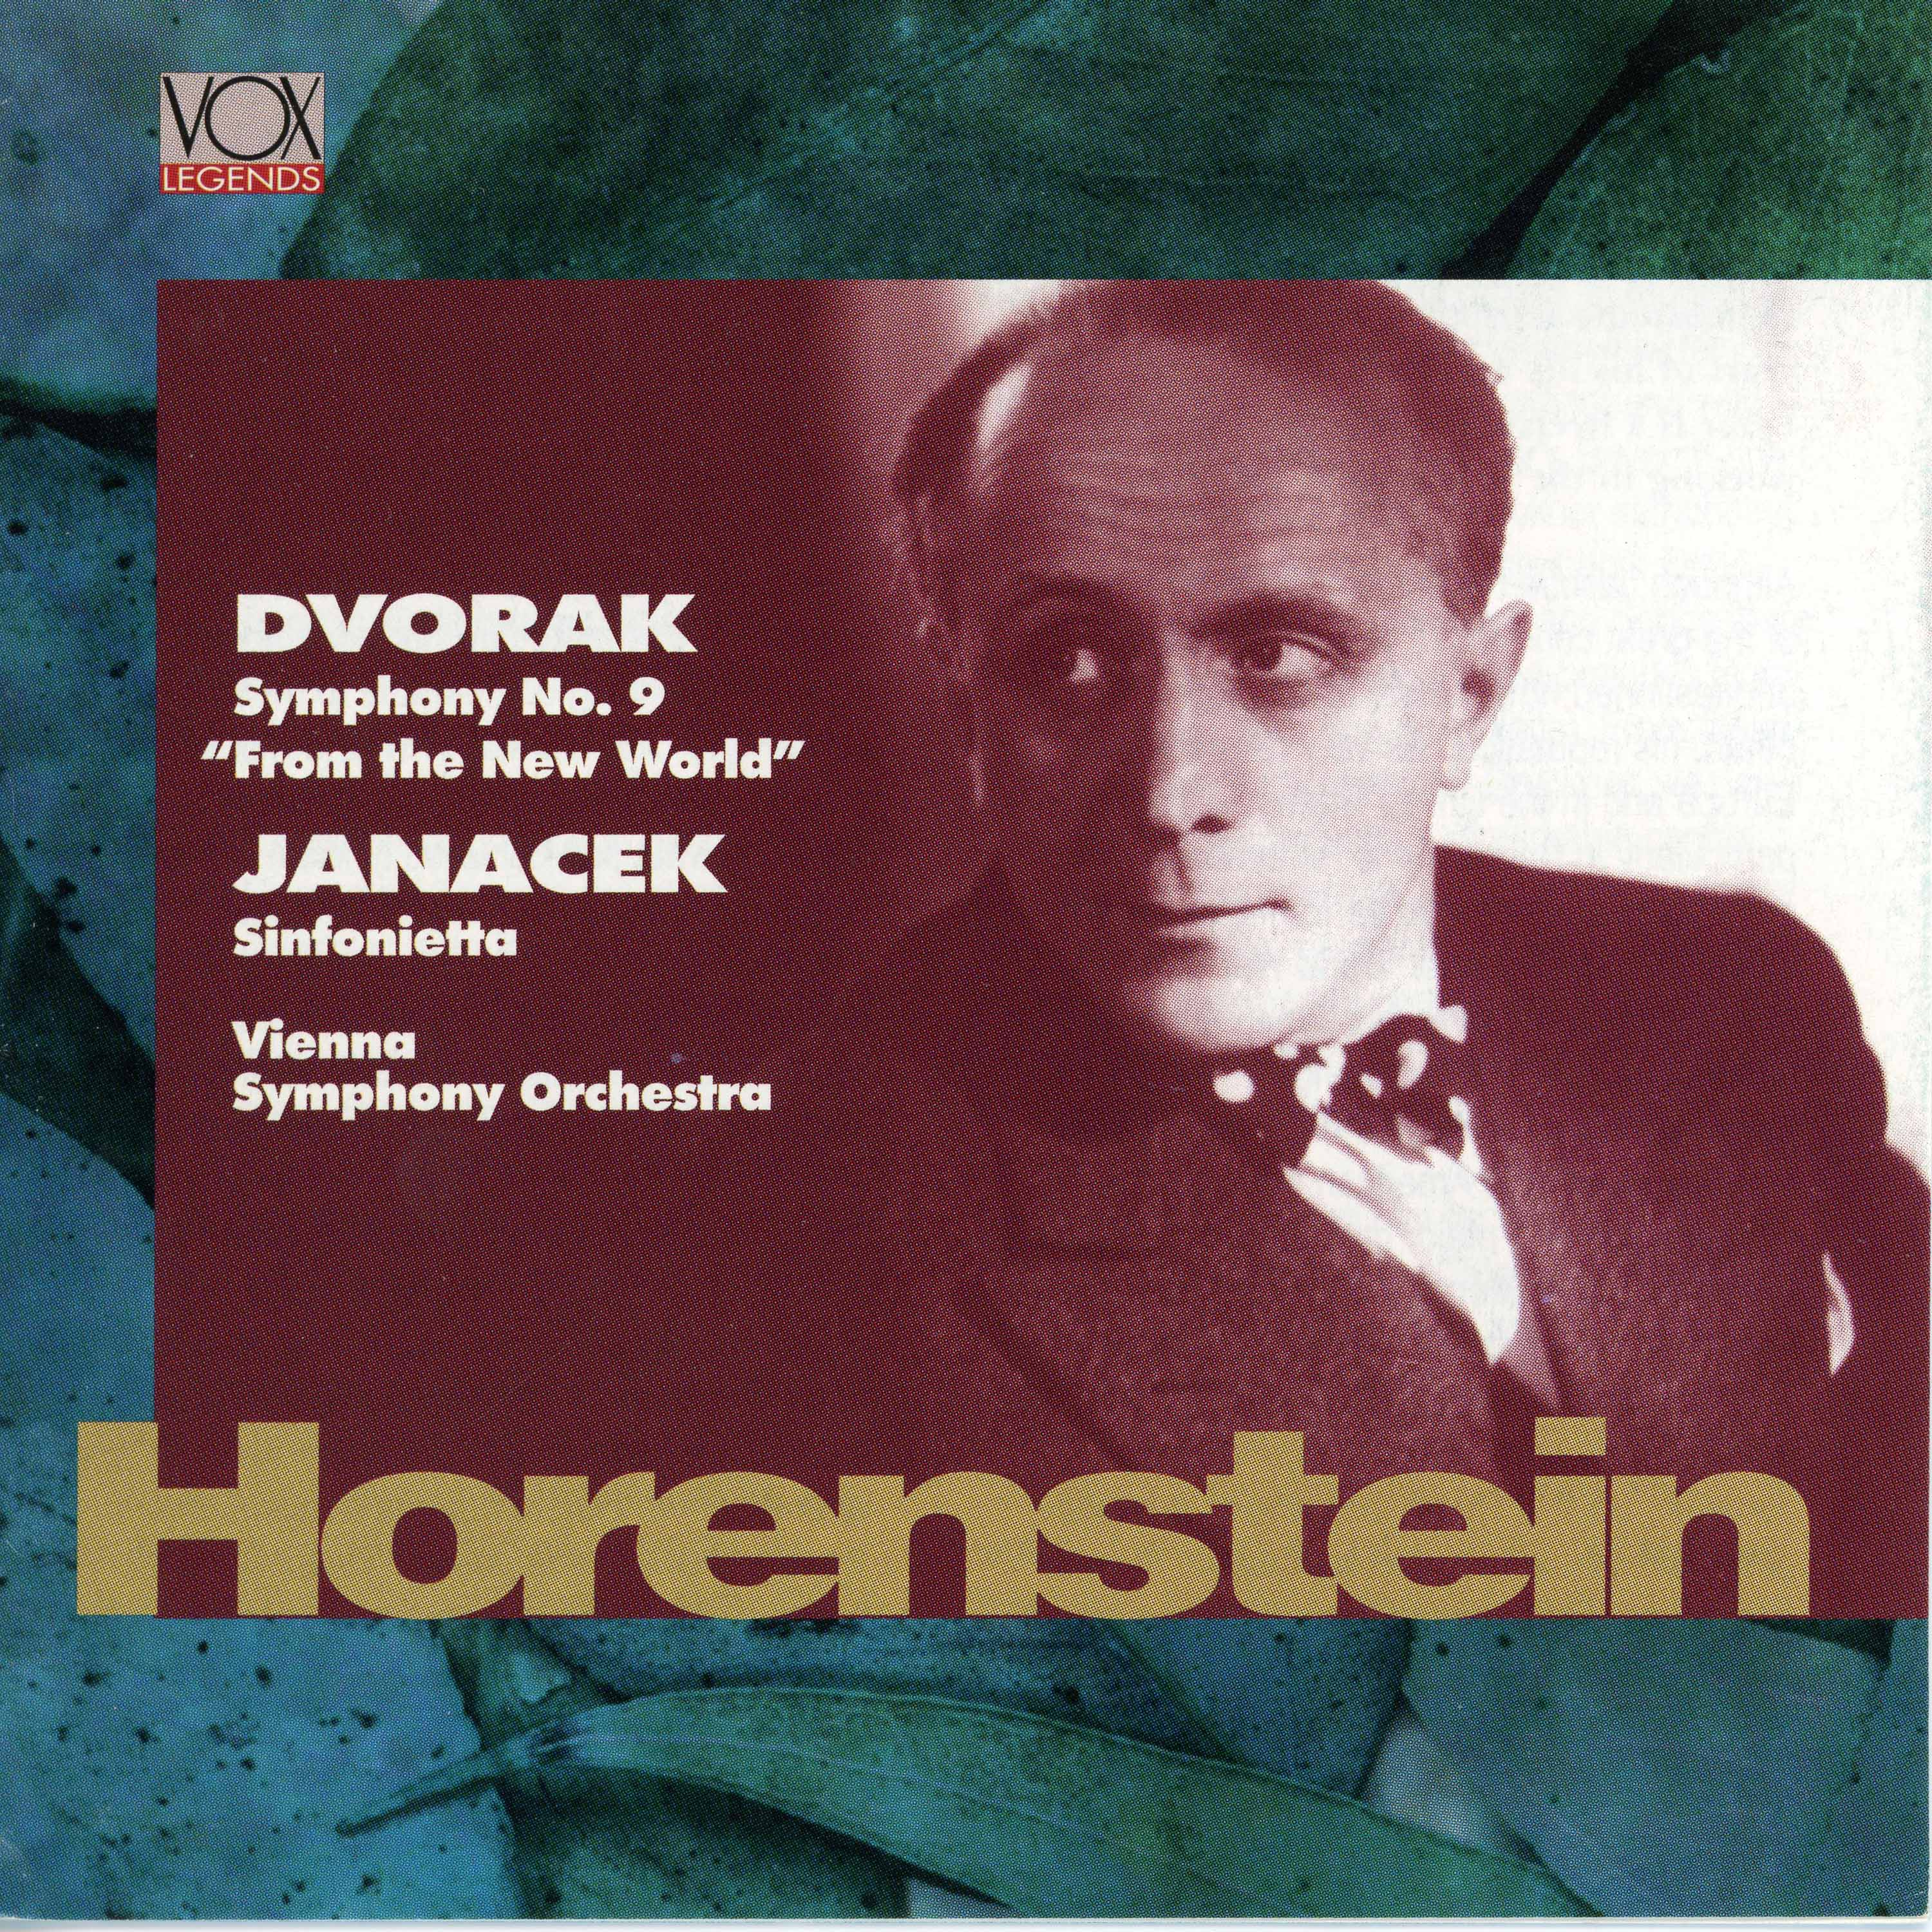 Dvoa k: Symphony No. 9 " From the New World"  Jana cek: Sinfonietta